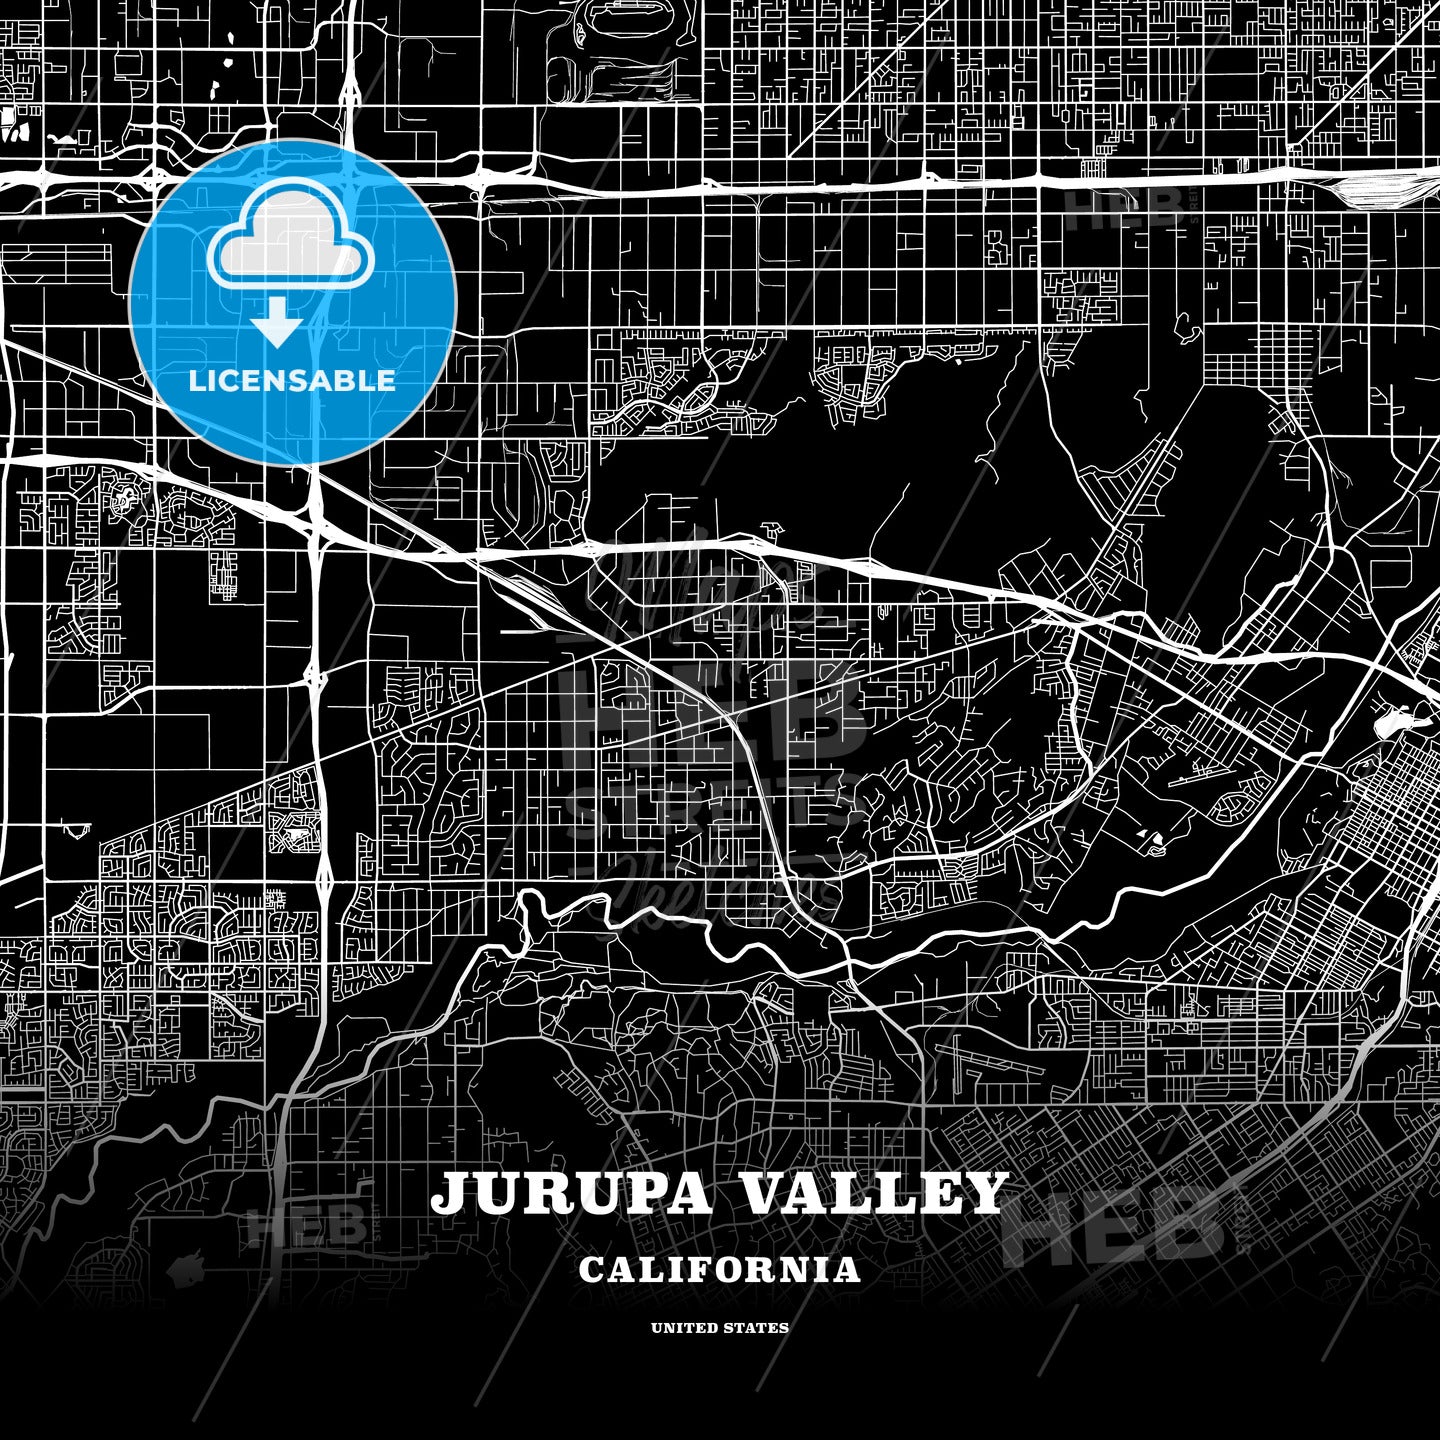 Jurupa Valley, California, USA map